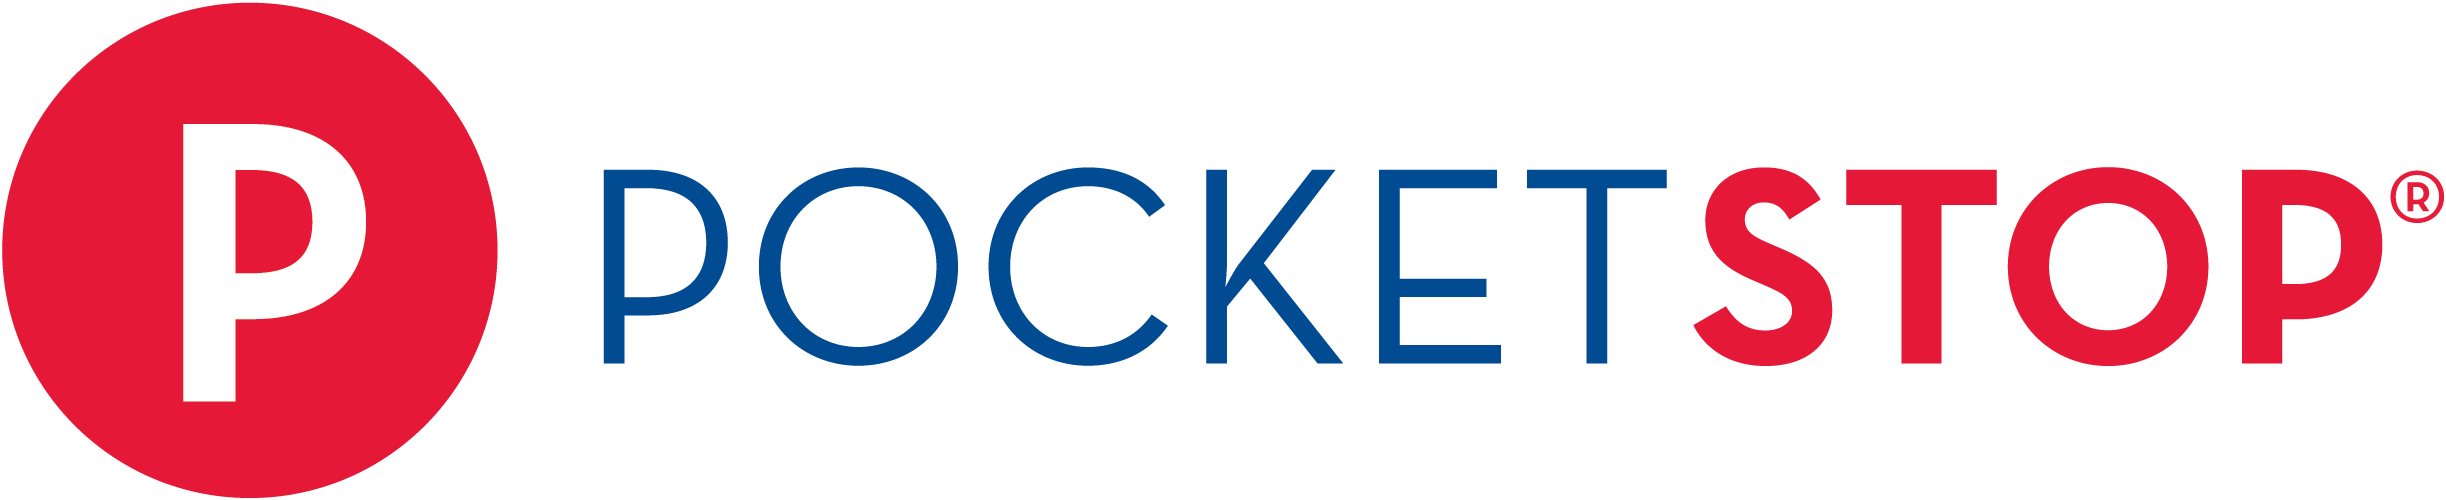 Pocketstop_Logo_Horizontal.png